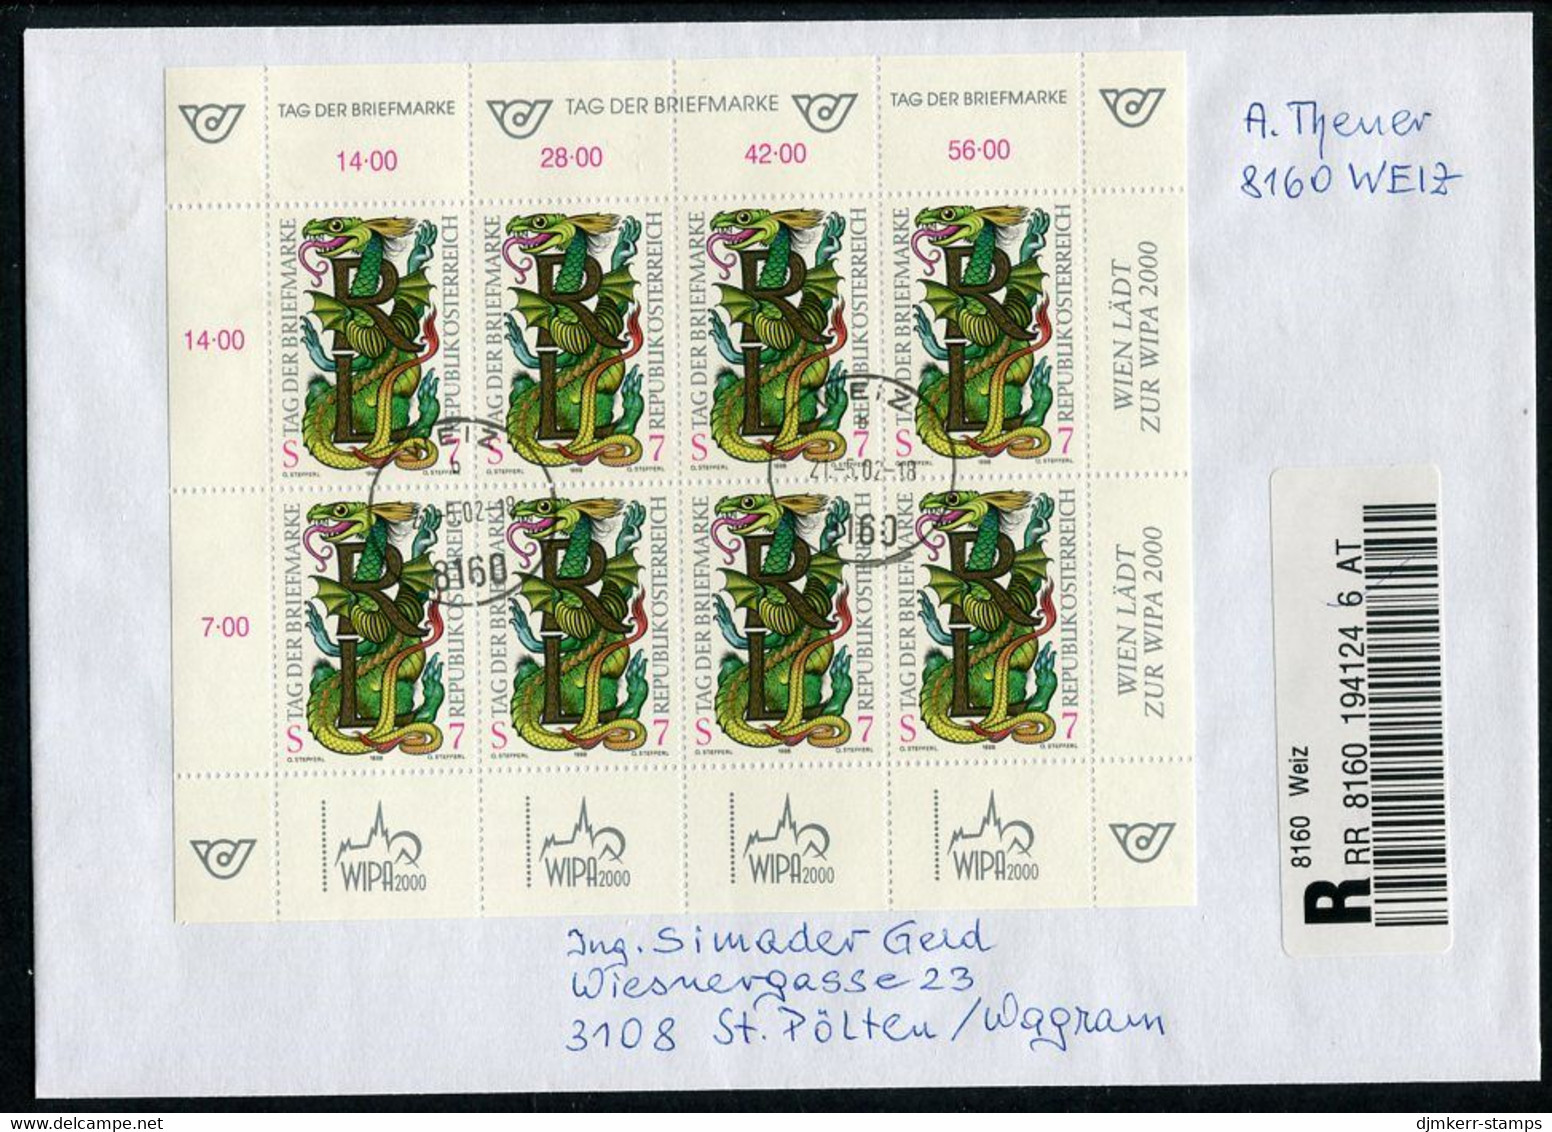 AUSTRIA 1998 Stamp Day Sheetlet, Postally Used On Registered Cover.  Michel 2260 Kb - Blocchi & Fogli